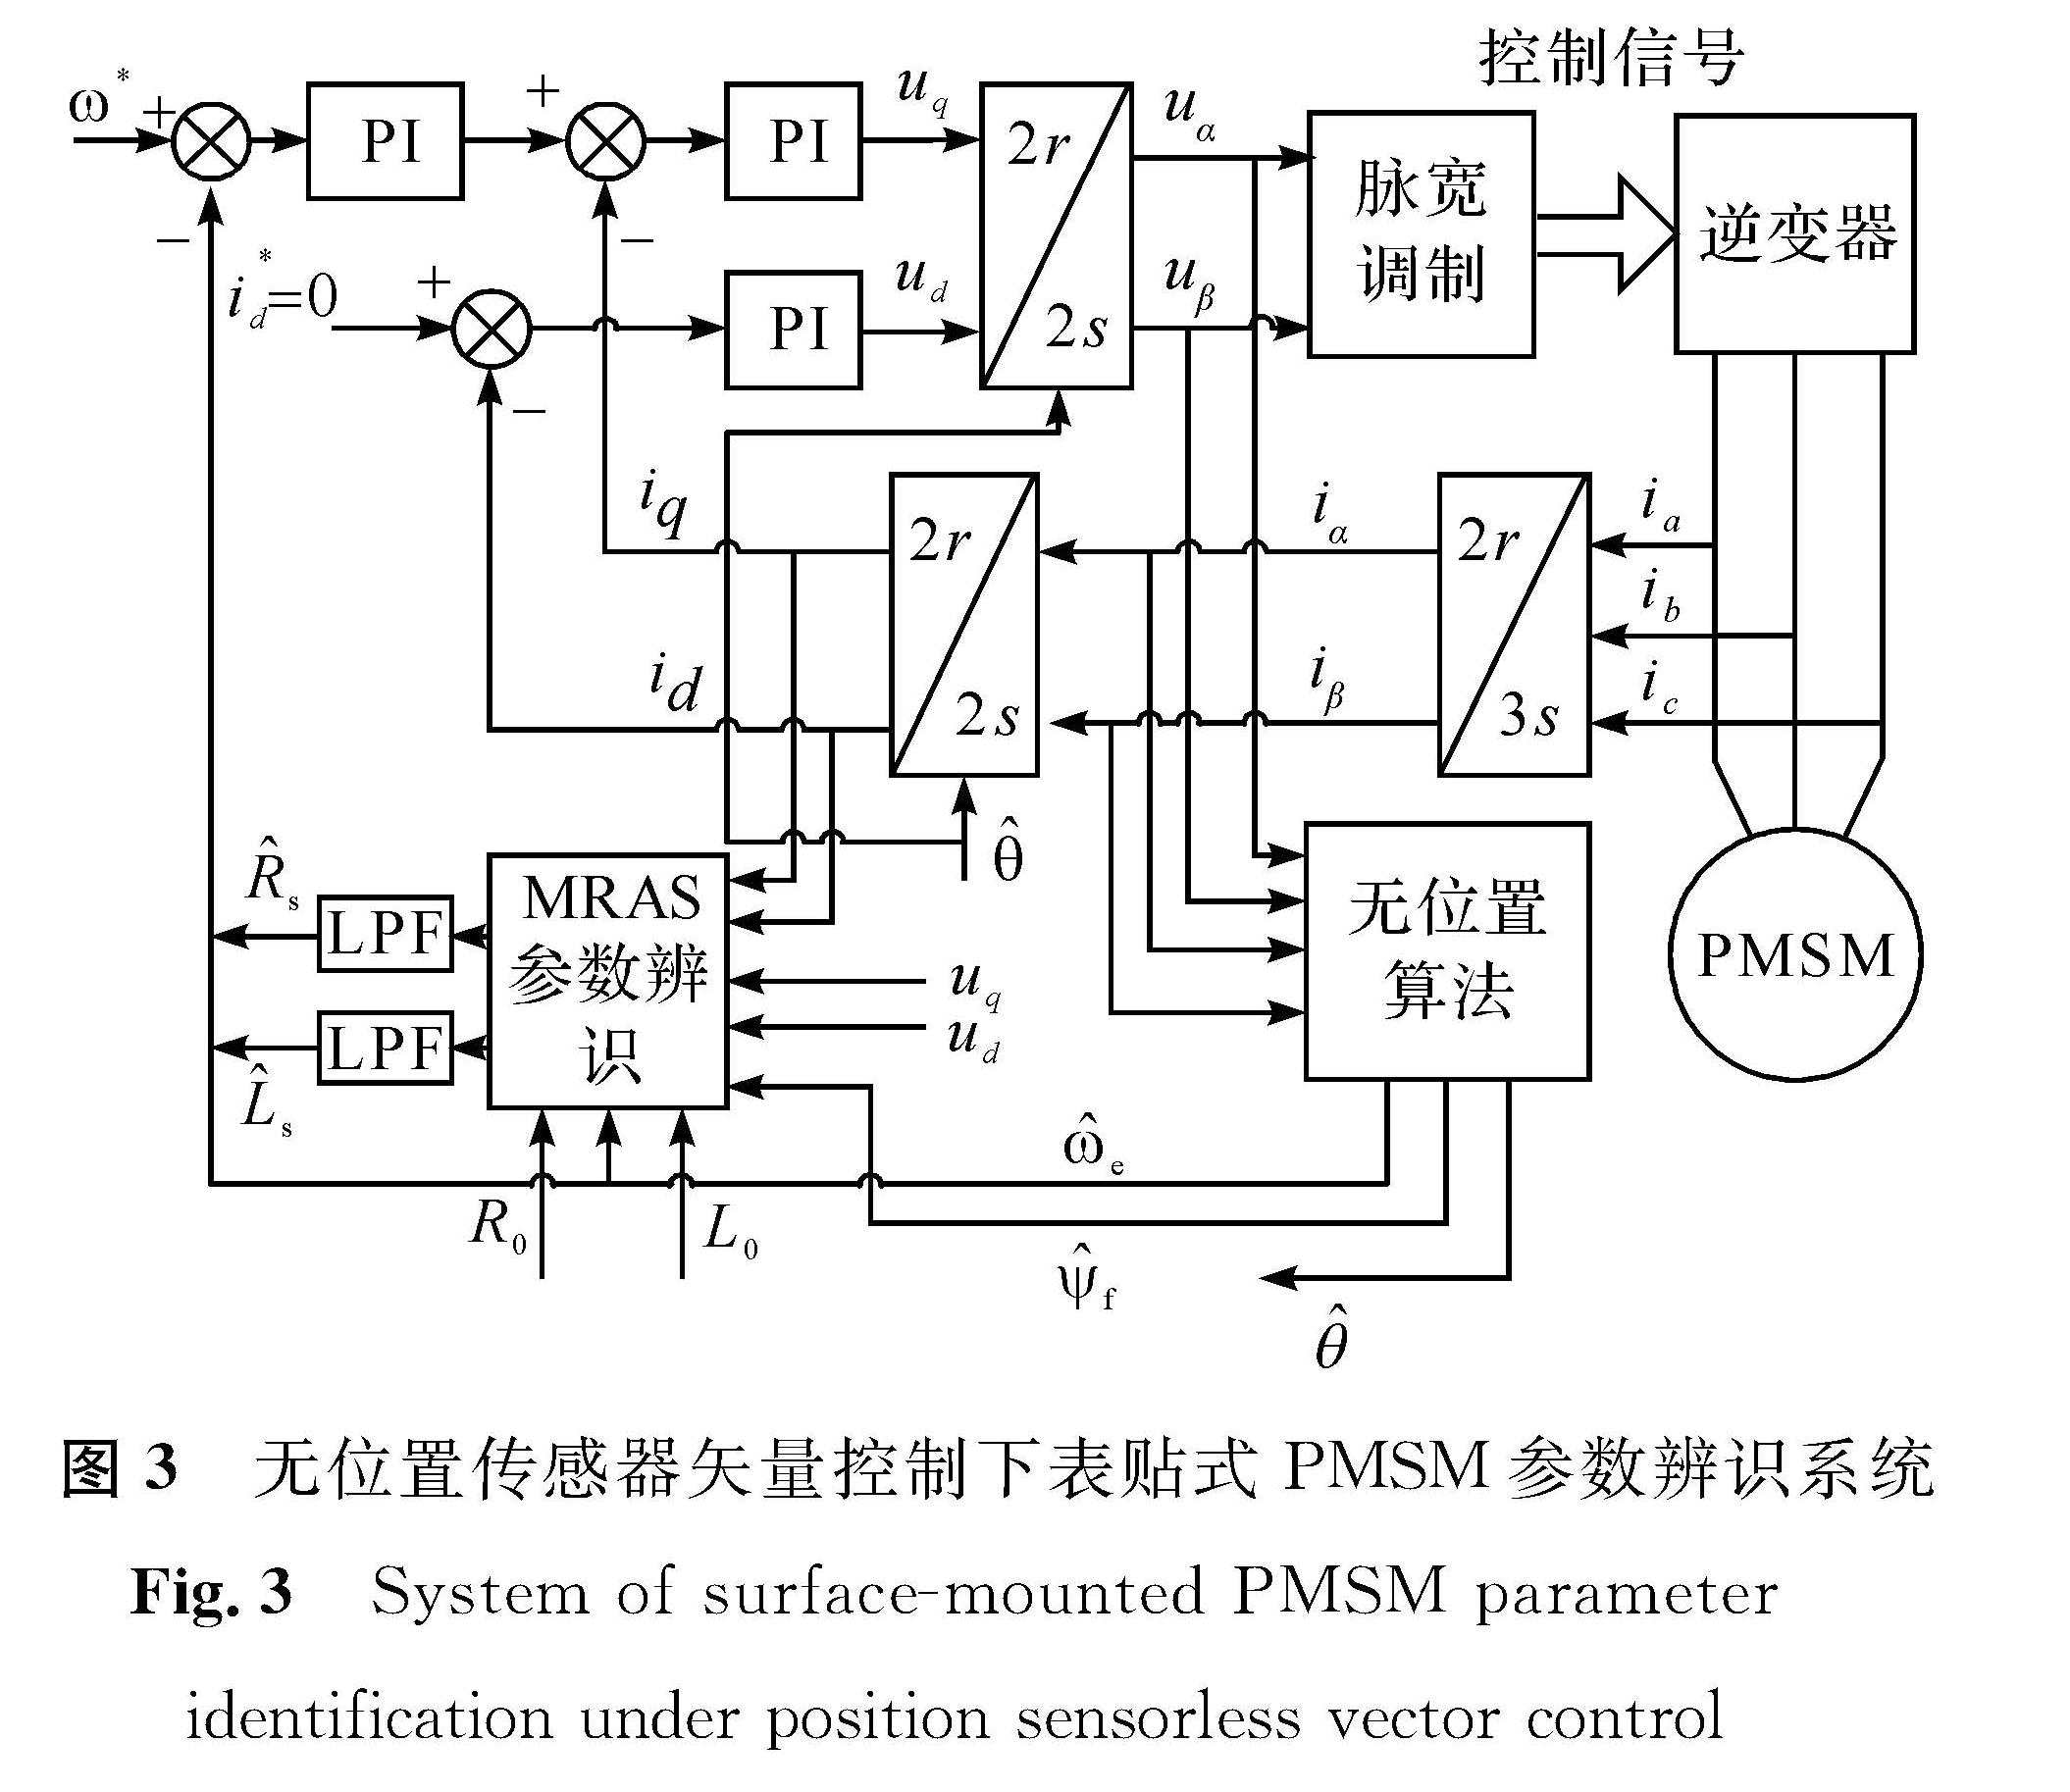 图3 无位置传感器矢量控制下表贴式PMSM参数辨识系统<br/>Fig.3 System of surface-mounted PMSM parameter identification under position sensorless vector control